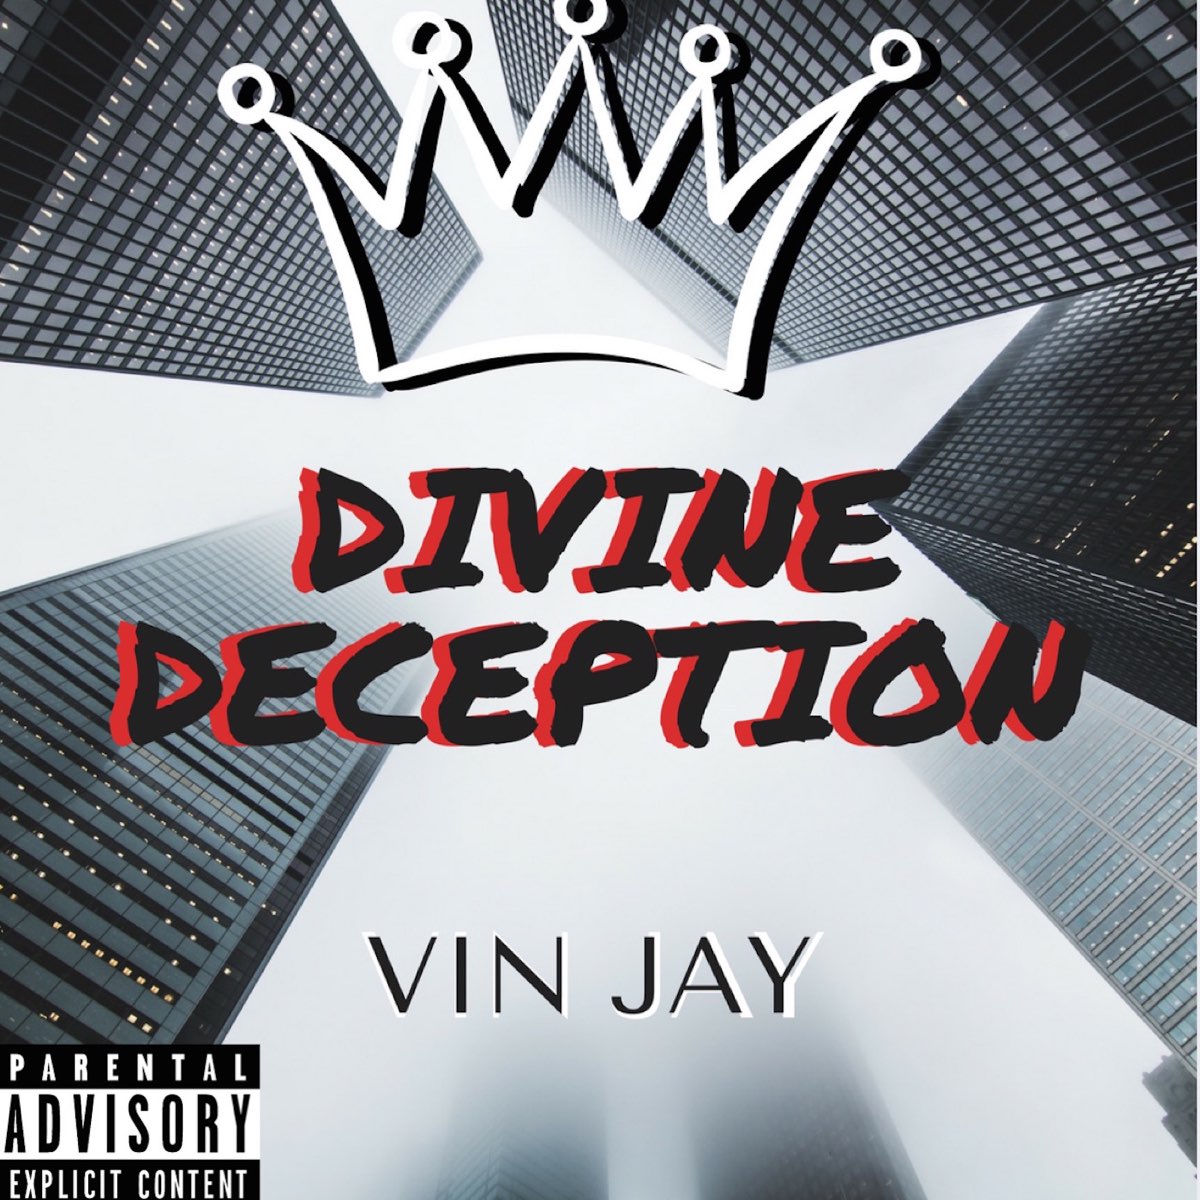 Vin jay. VIN Jay - Overdose. Divine Deception. "VIN Jay" && ( исполнитель | группа | музыка | Music | Band | artist ) && (фото | photo).